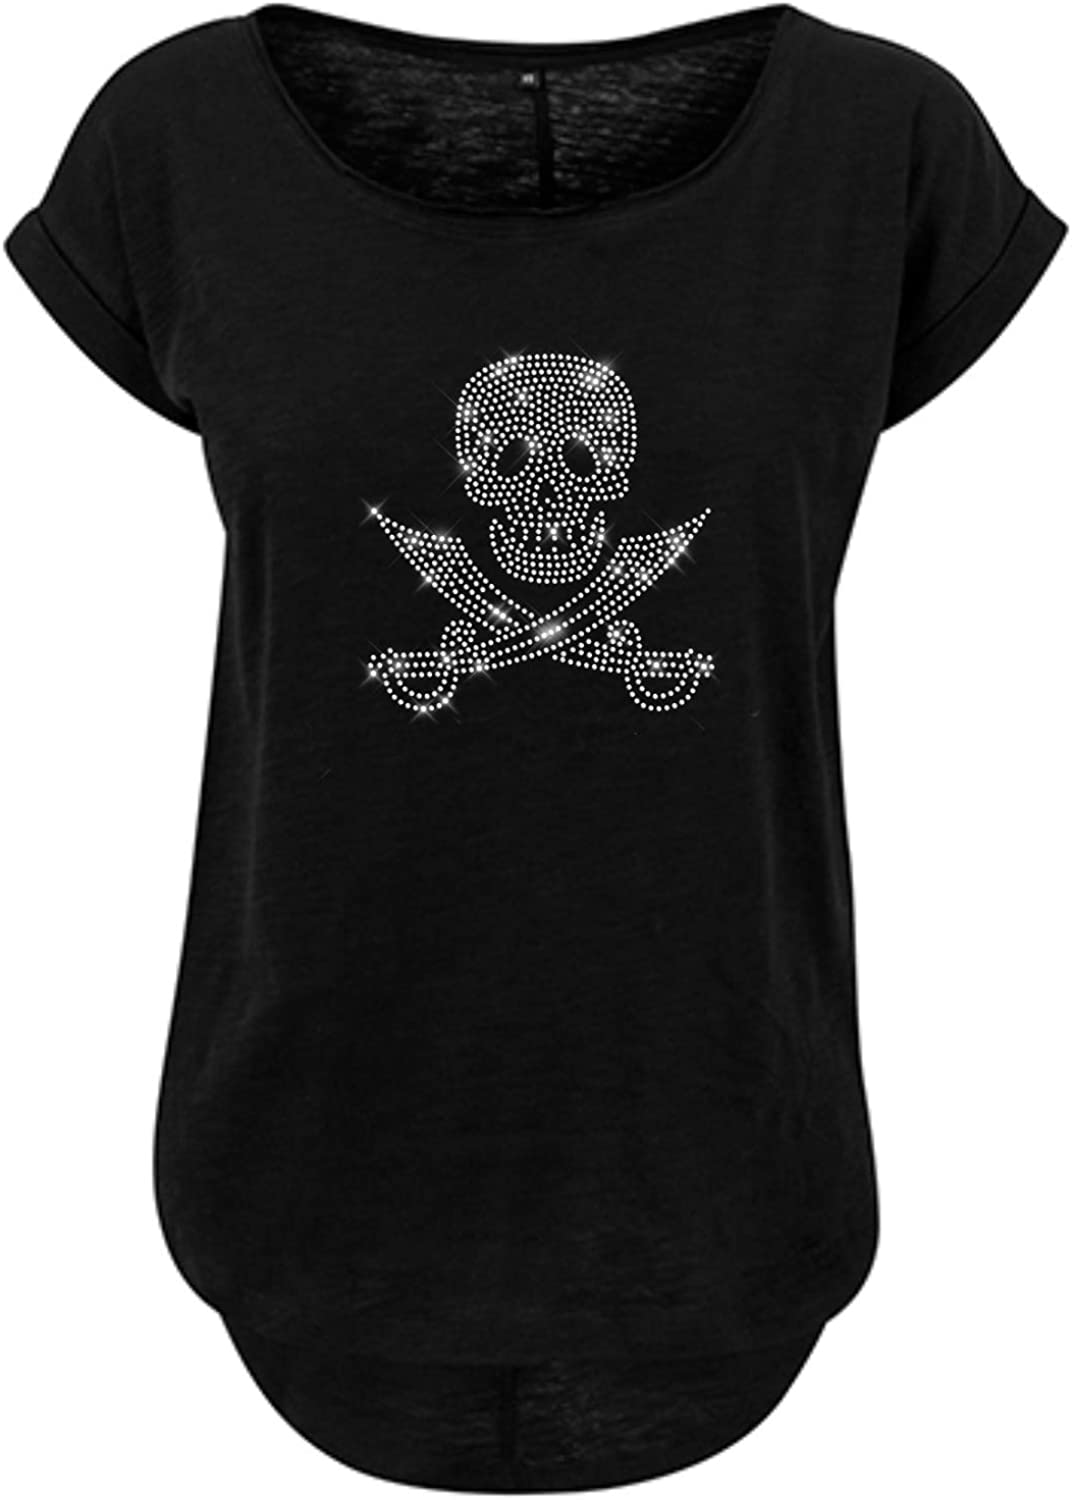 Blingeling®Damen T-Shirt Totenkopf mit gekreuzten Piraten Säbeln in Kristall Strass